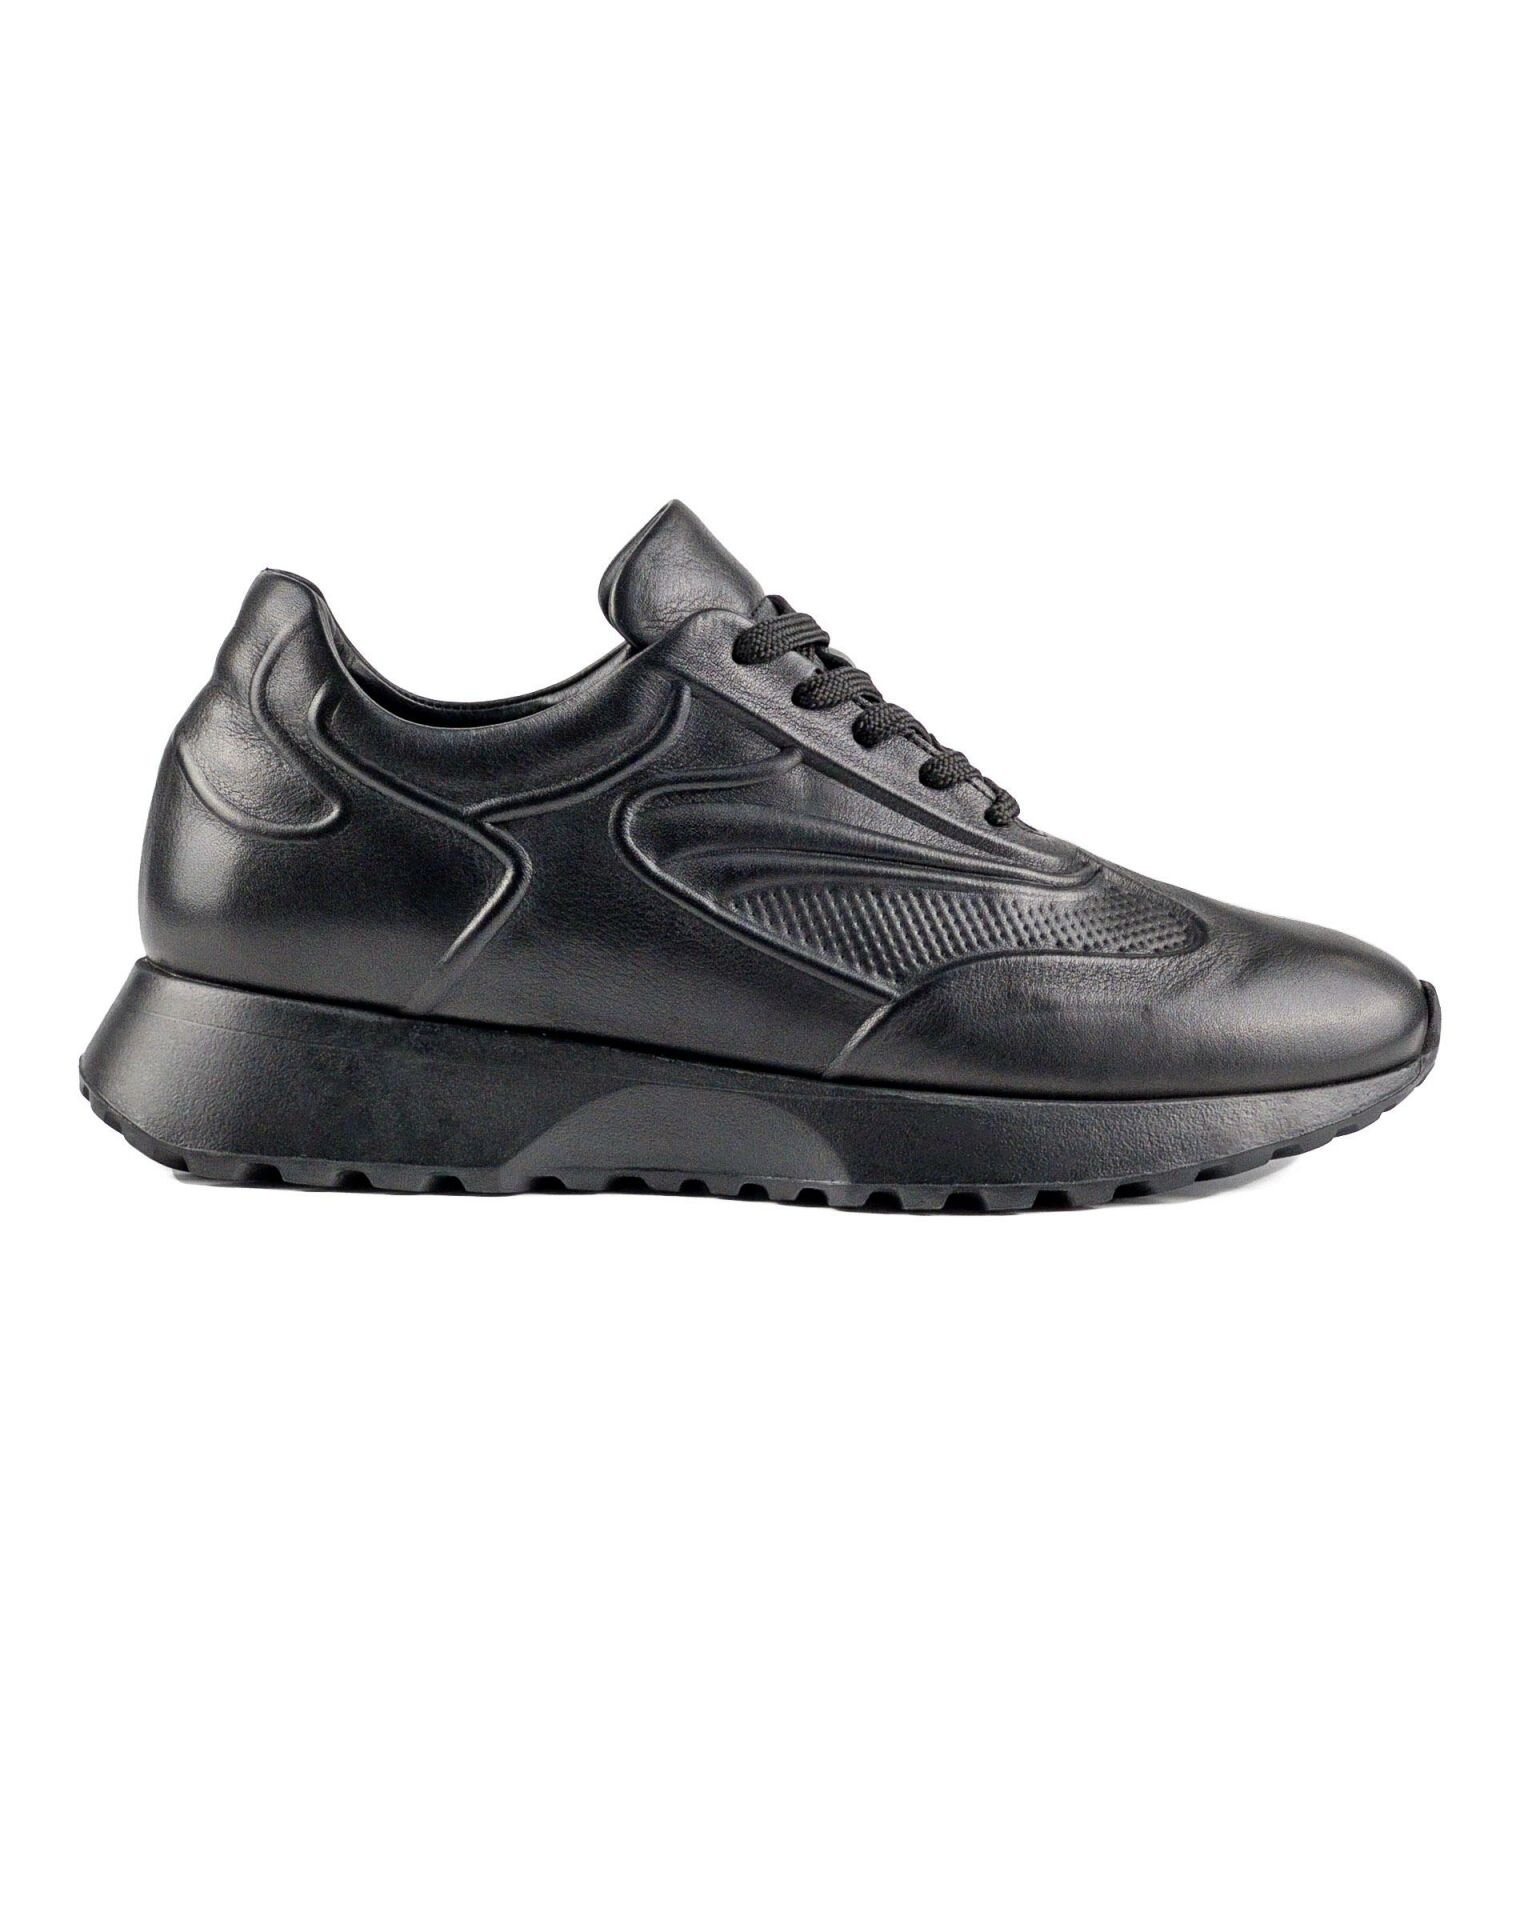 Diavel Black Genuine Leather Men's Sports (Sneaker) Shoes